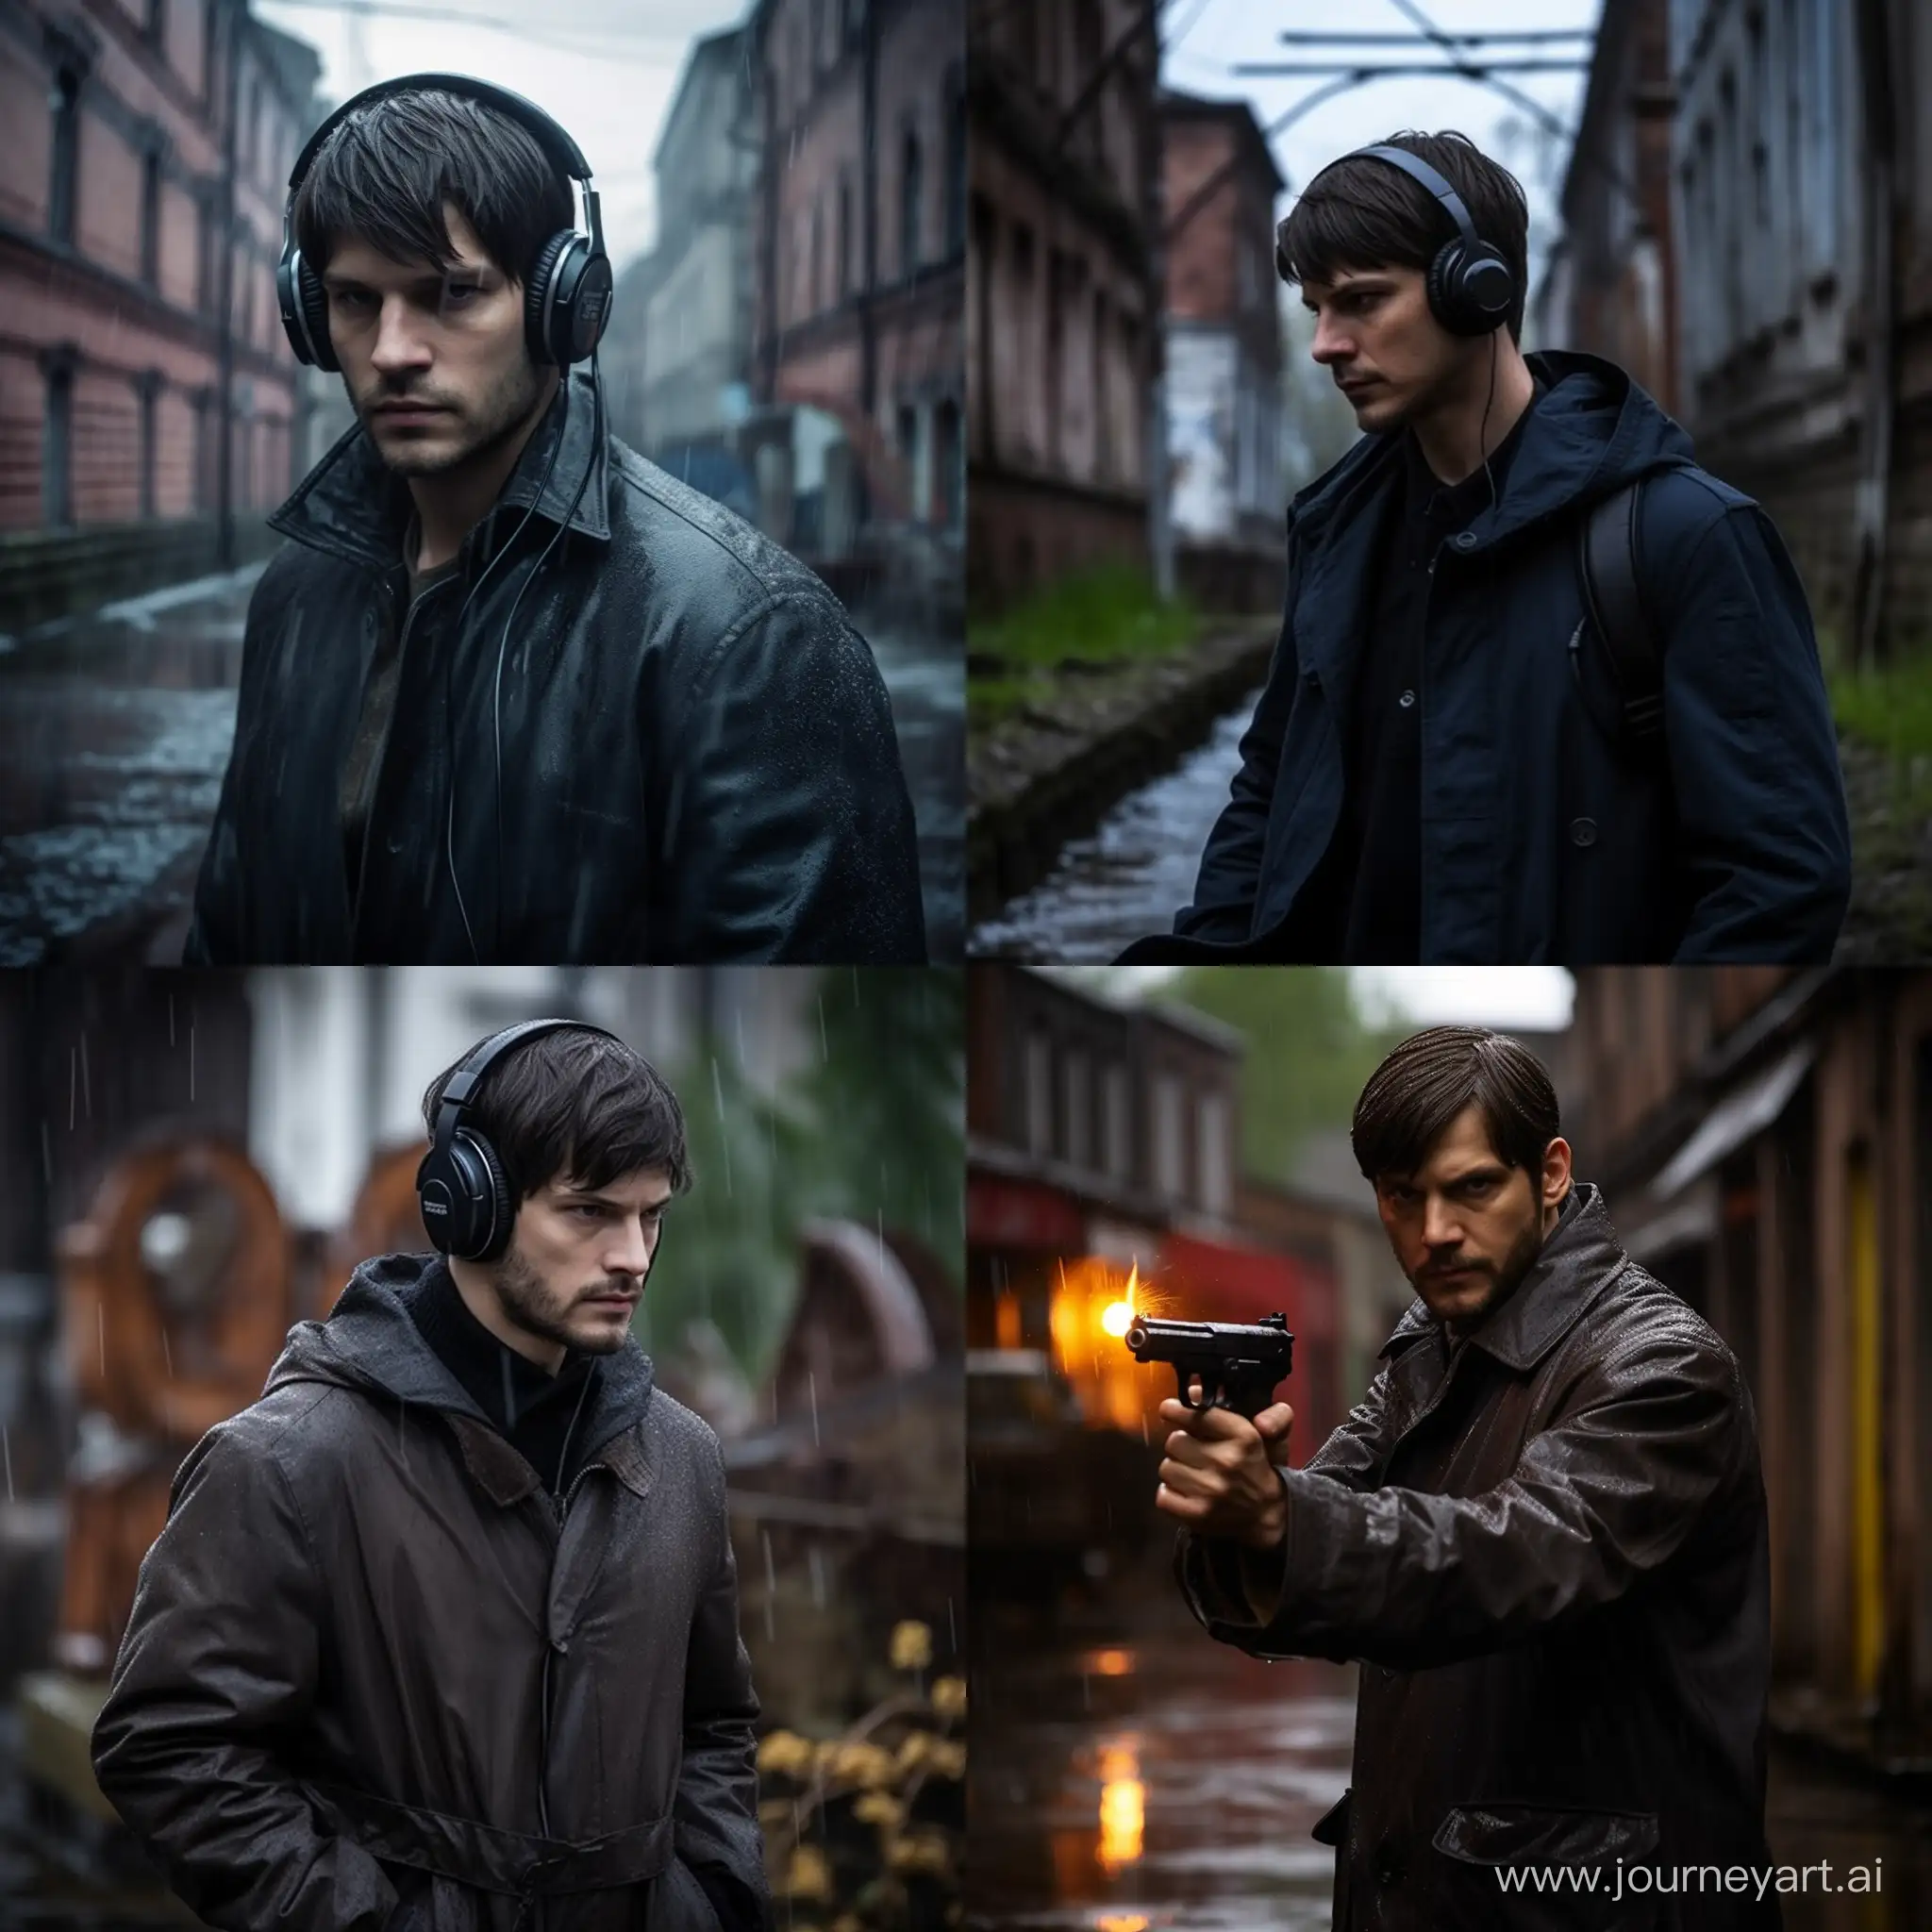 Ashton-Kutcher-Portrays-Danila-Bagrov-the-Brooding-Gangster-Amidst-St-Petersburg-Rain-with-a-Gun-and-Headphones